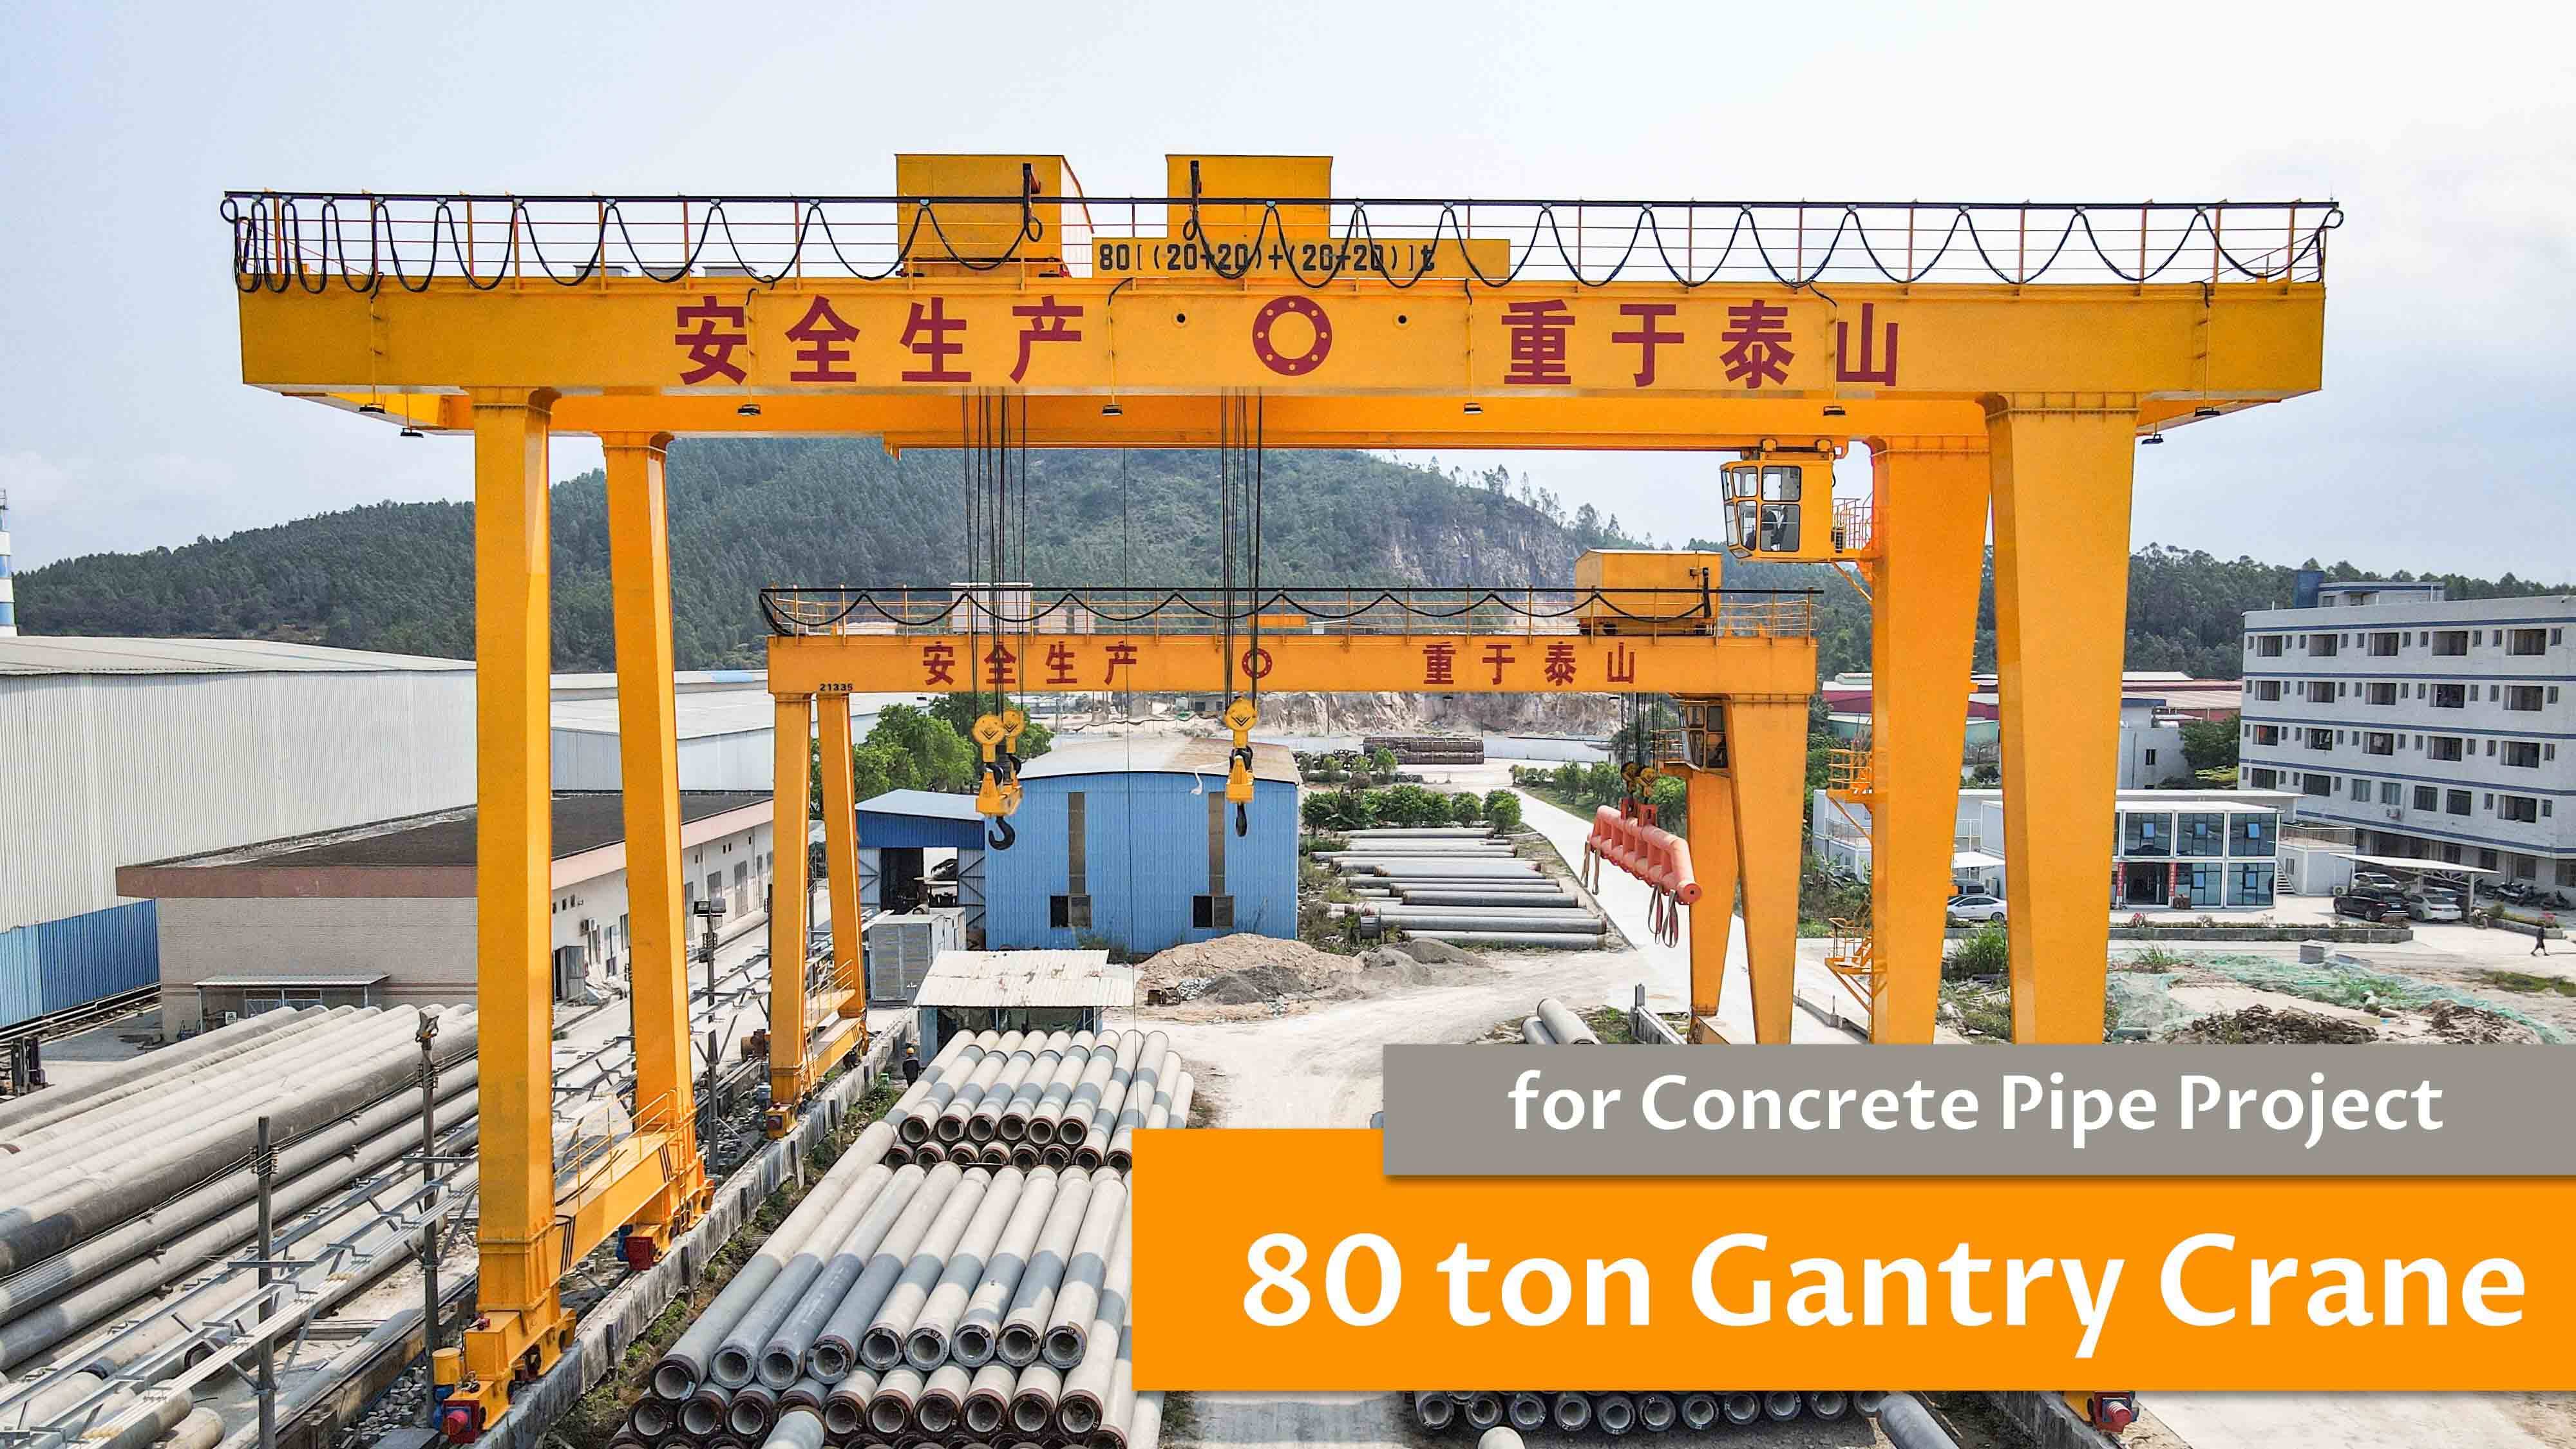 Guanhui 80 ton Gantry Crane for Concrete Pipe Project